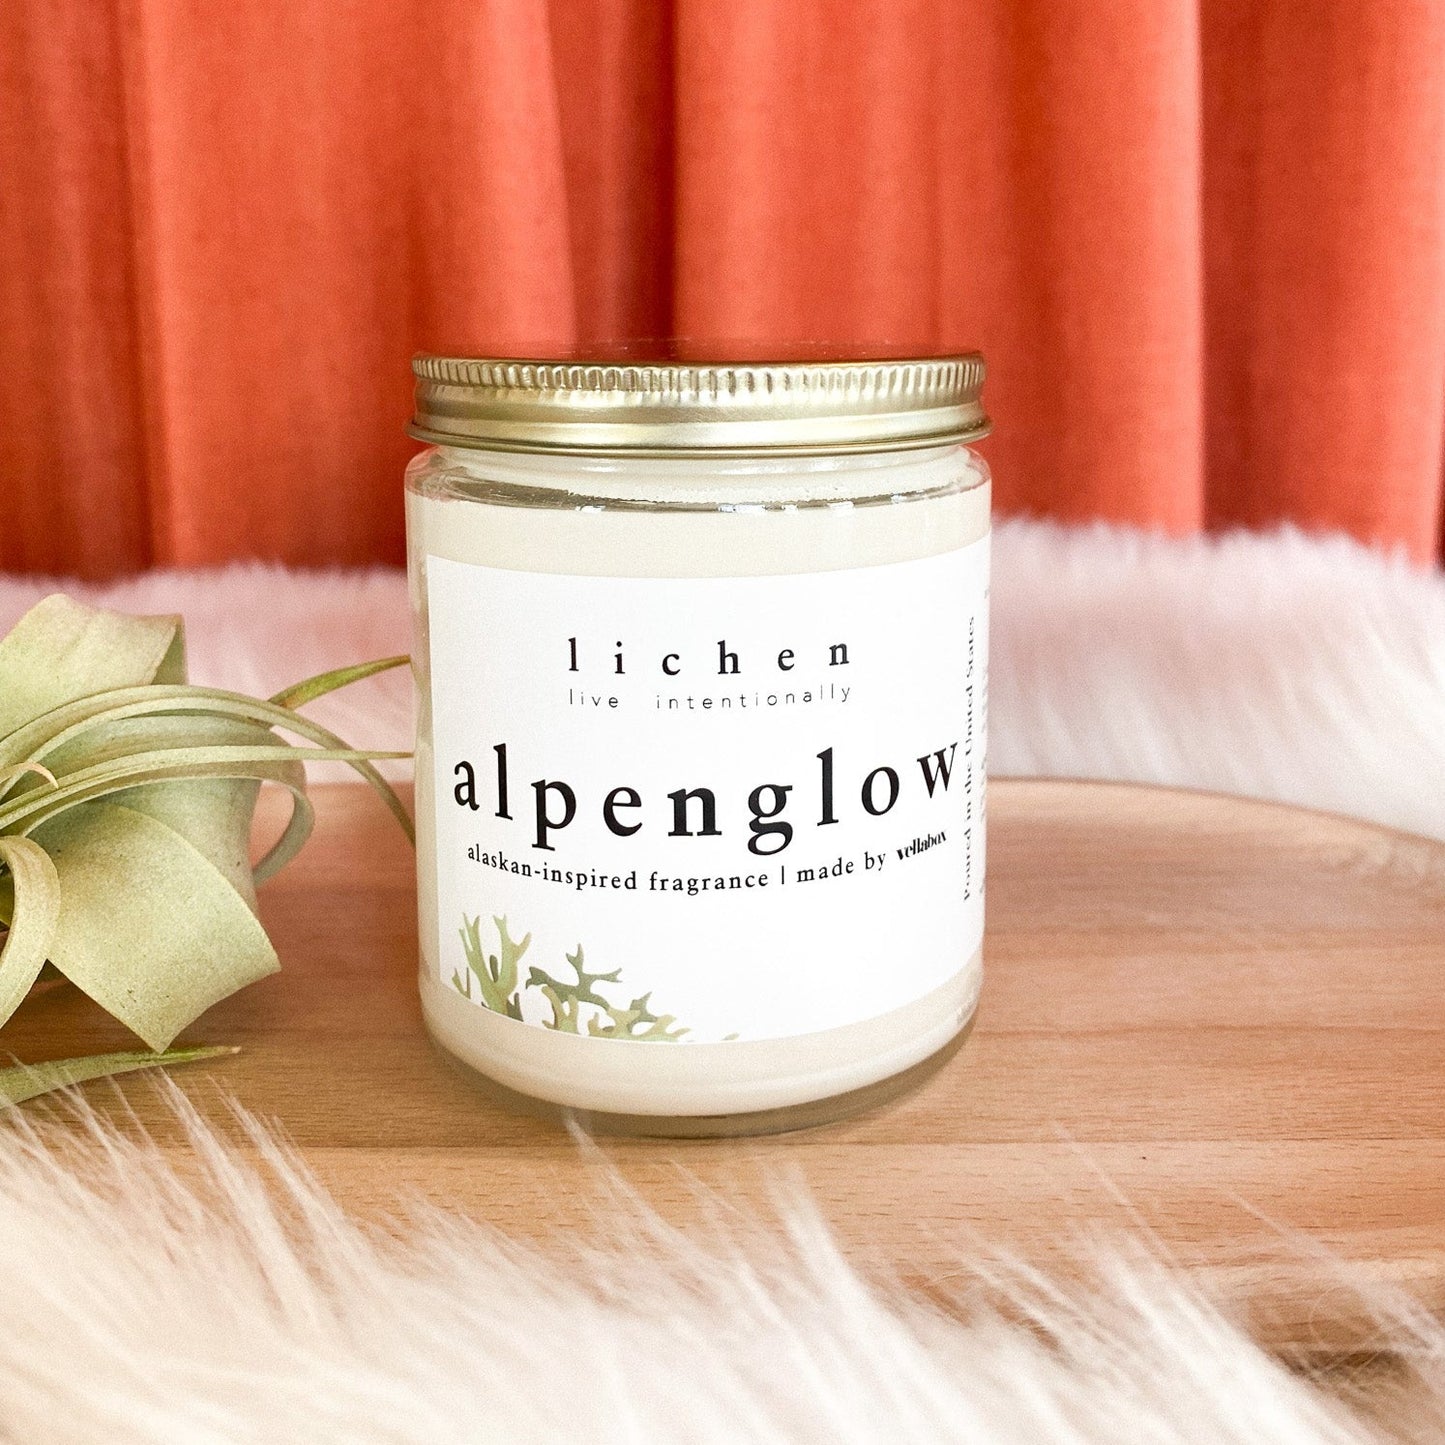 Alpenglow Soy Wax Candle by Lichen x Vellabox